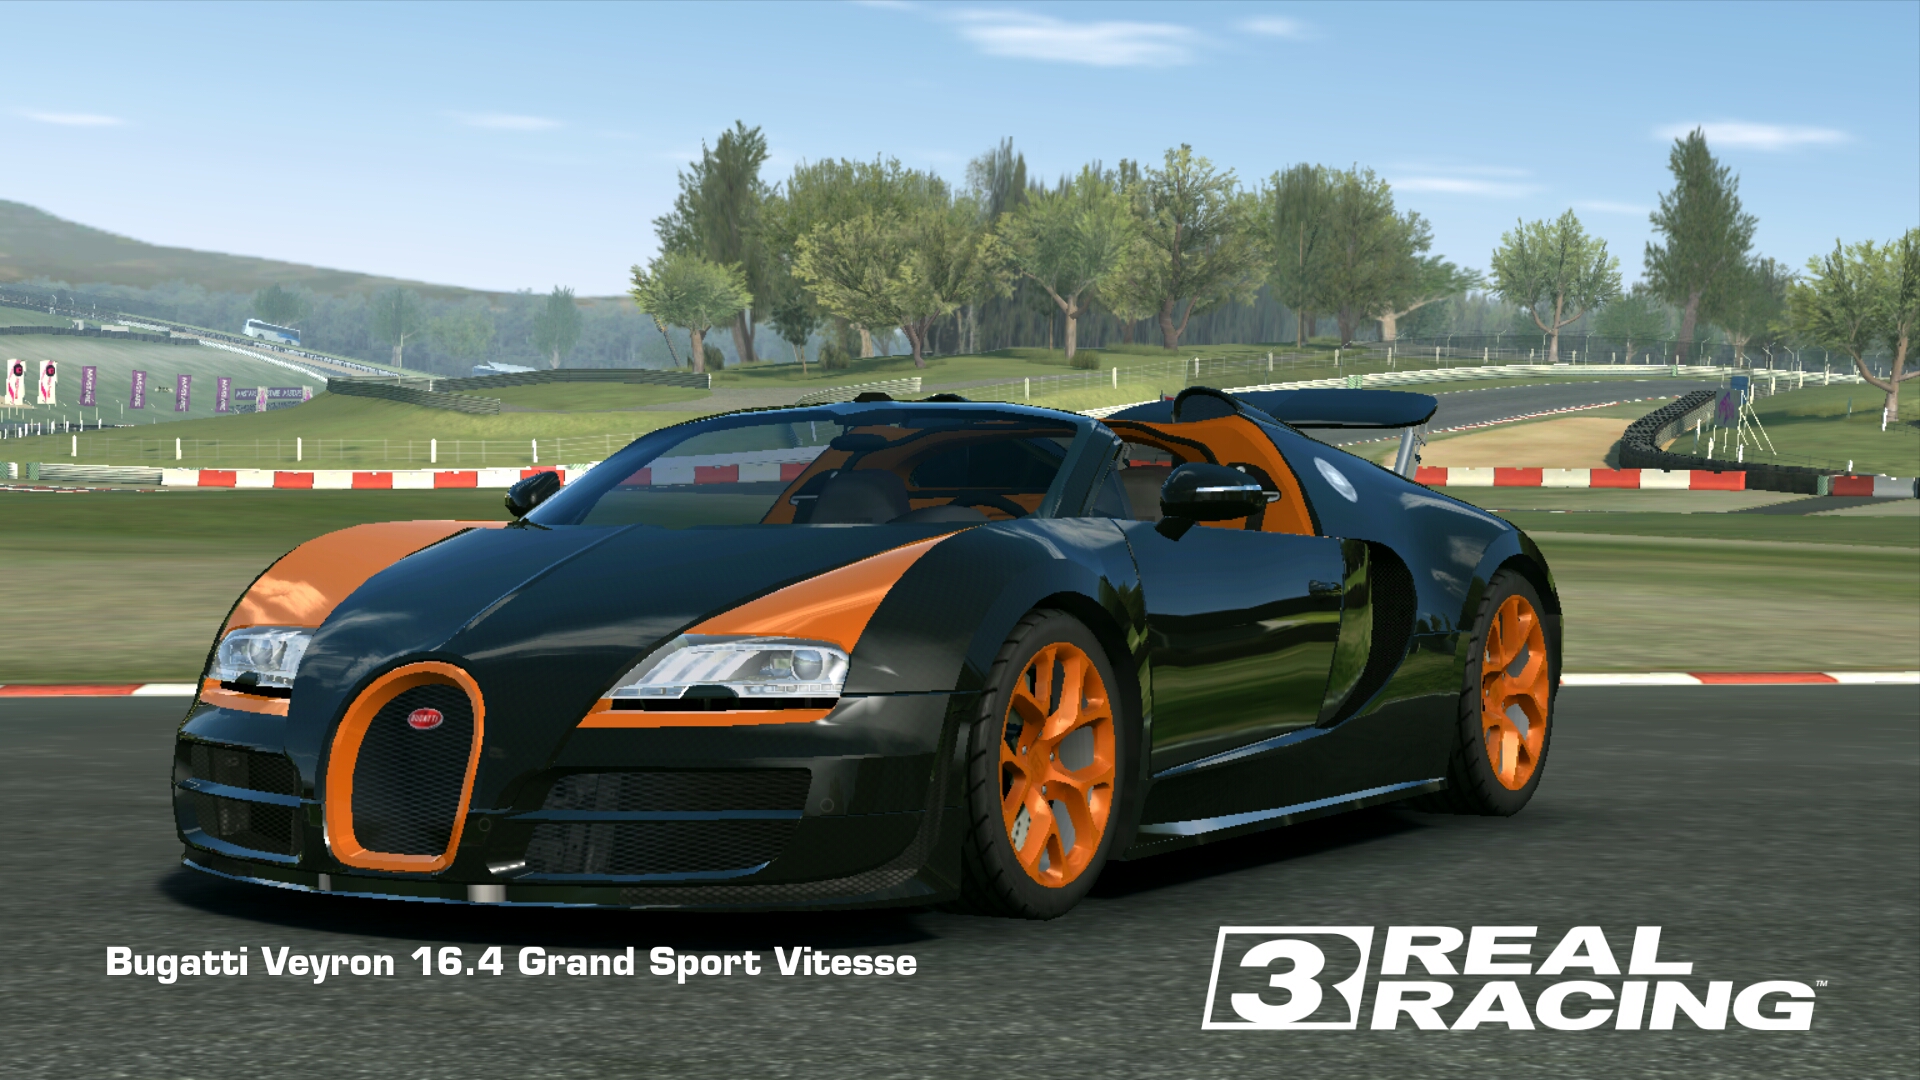 Bugatti Veyron 16.4 Grand Sport Backgrounds, Compatible - PC, Mobile, Gadgets| 1920x1080 px